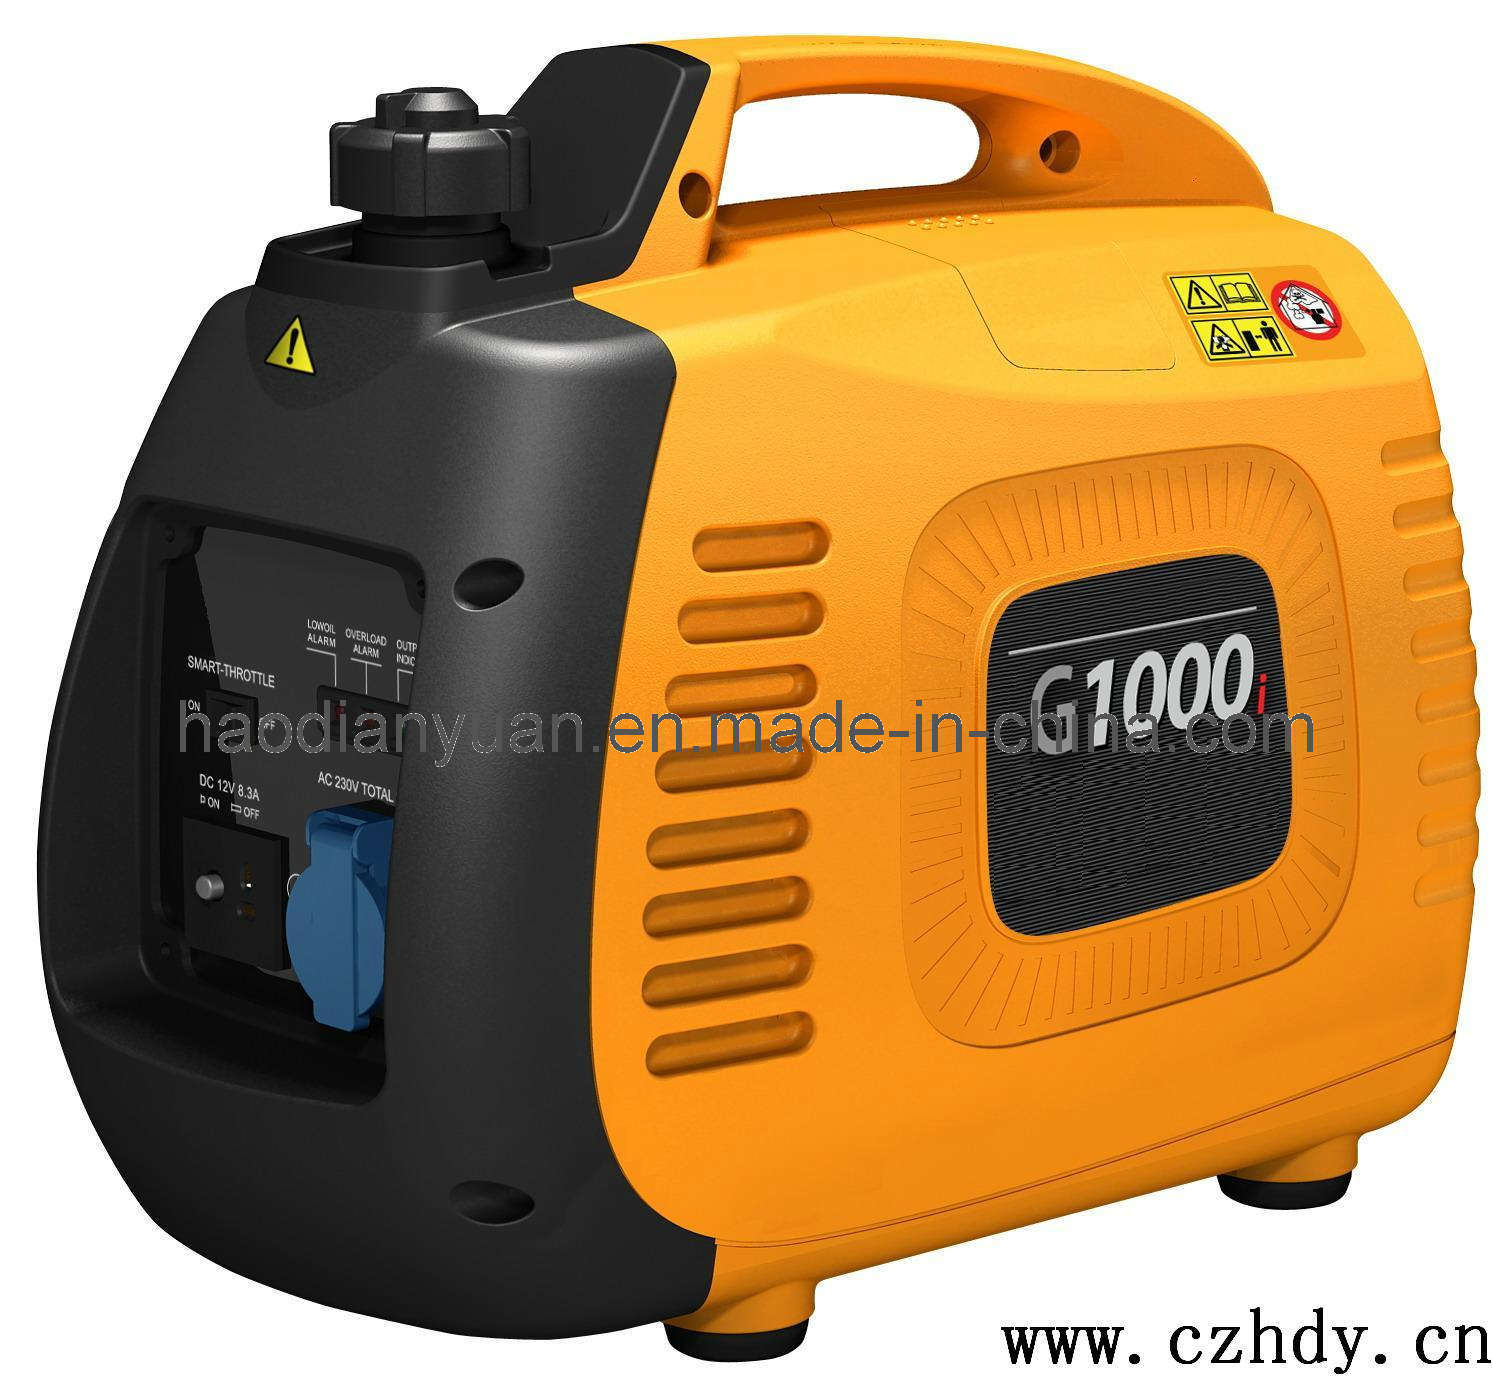 Digital Generator (G1000I)